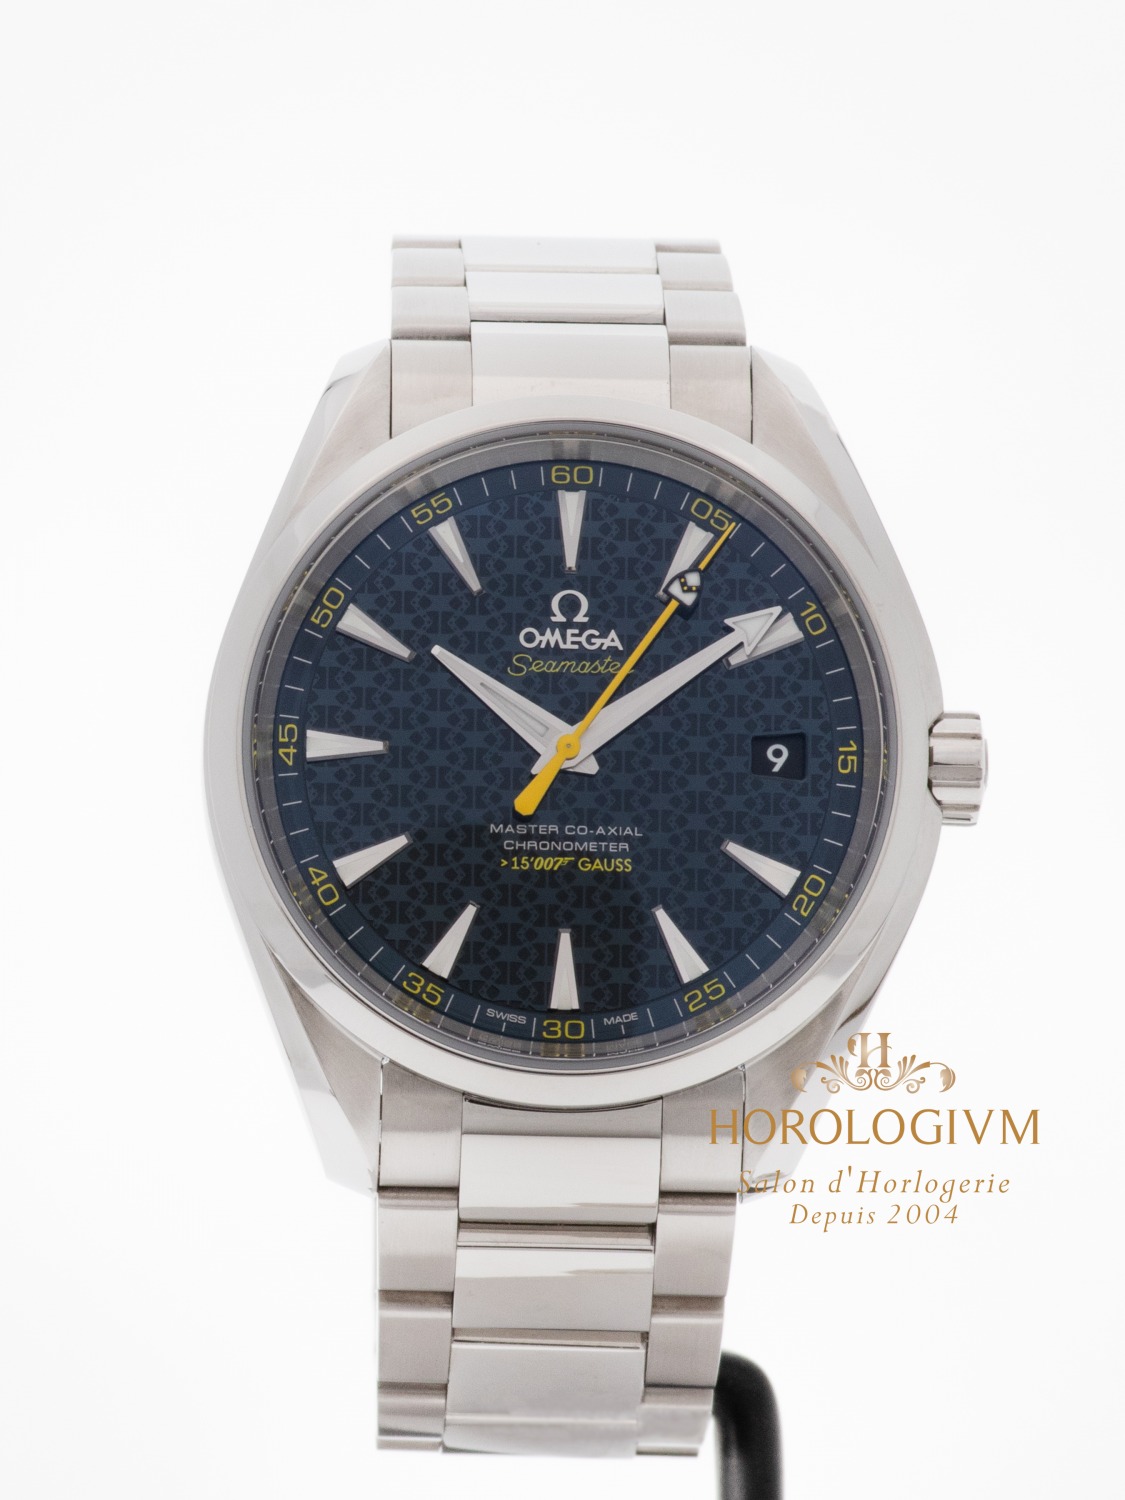 Omega Seamaster Aqua Terra Seamaster James Bond Limited 15007 pcs REF. 231.10.42.21.03.004 watch, silver